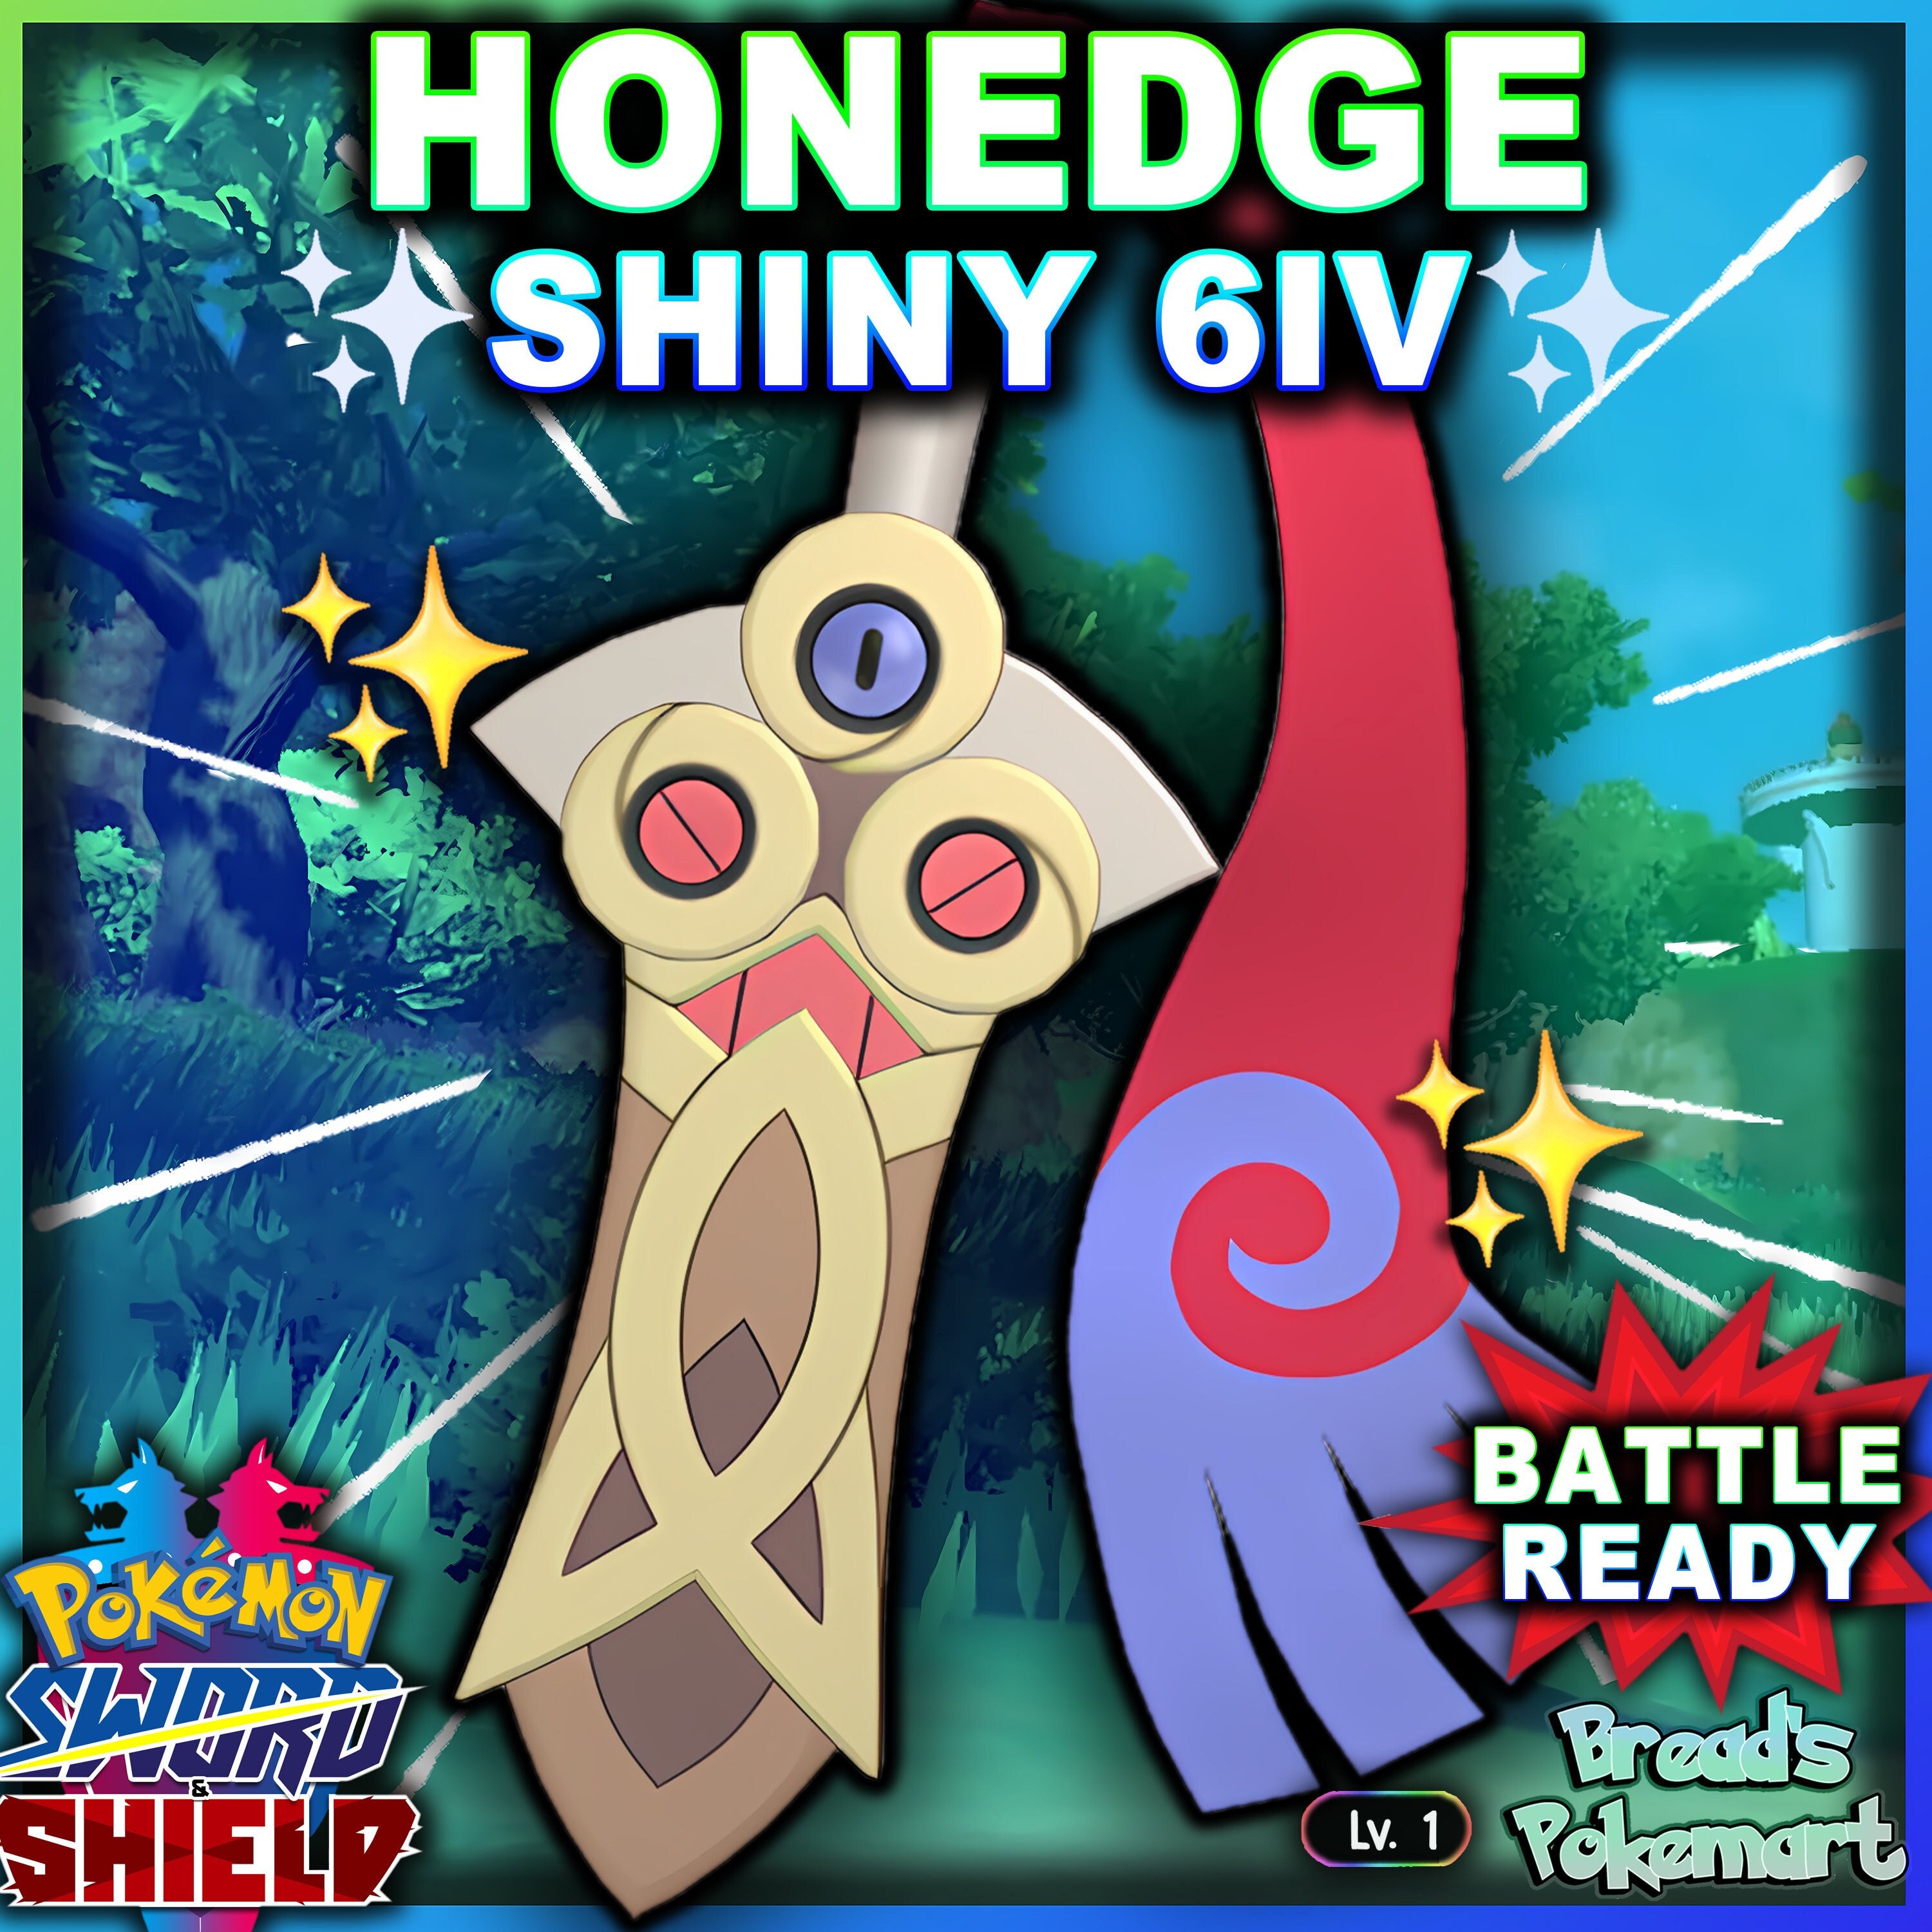 Pokemon Sword And Shield Shiny All Ultra Beast Bundle 6IV Battle Ready